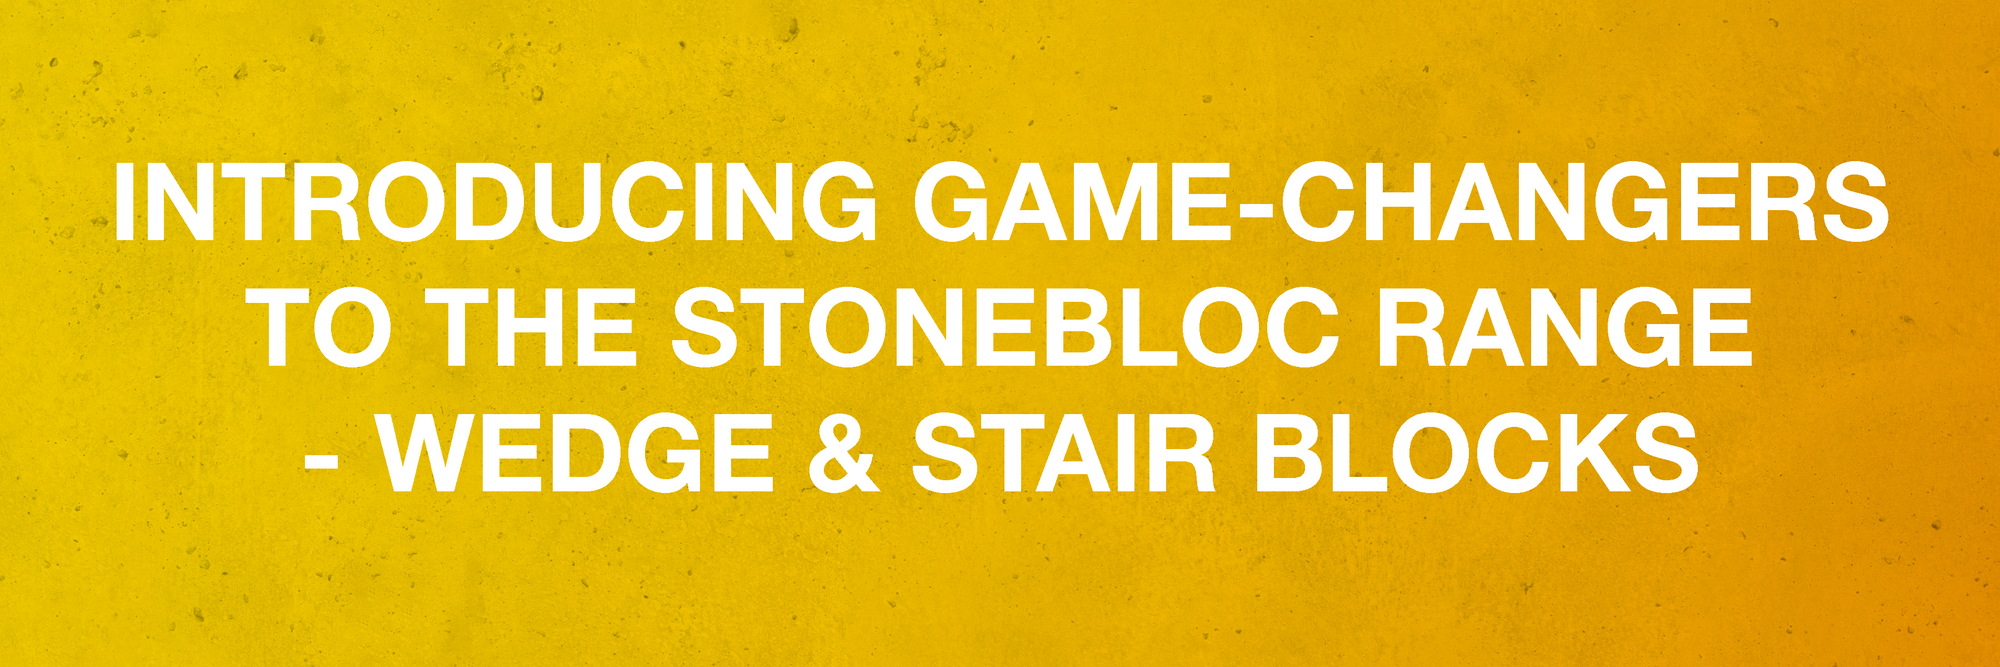 Introducing Stonebloc's Wedge & Stair